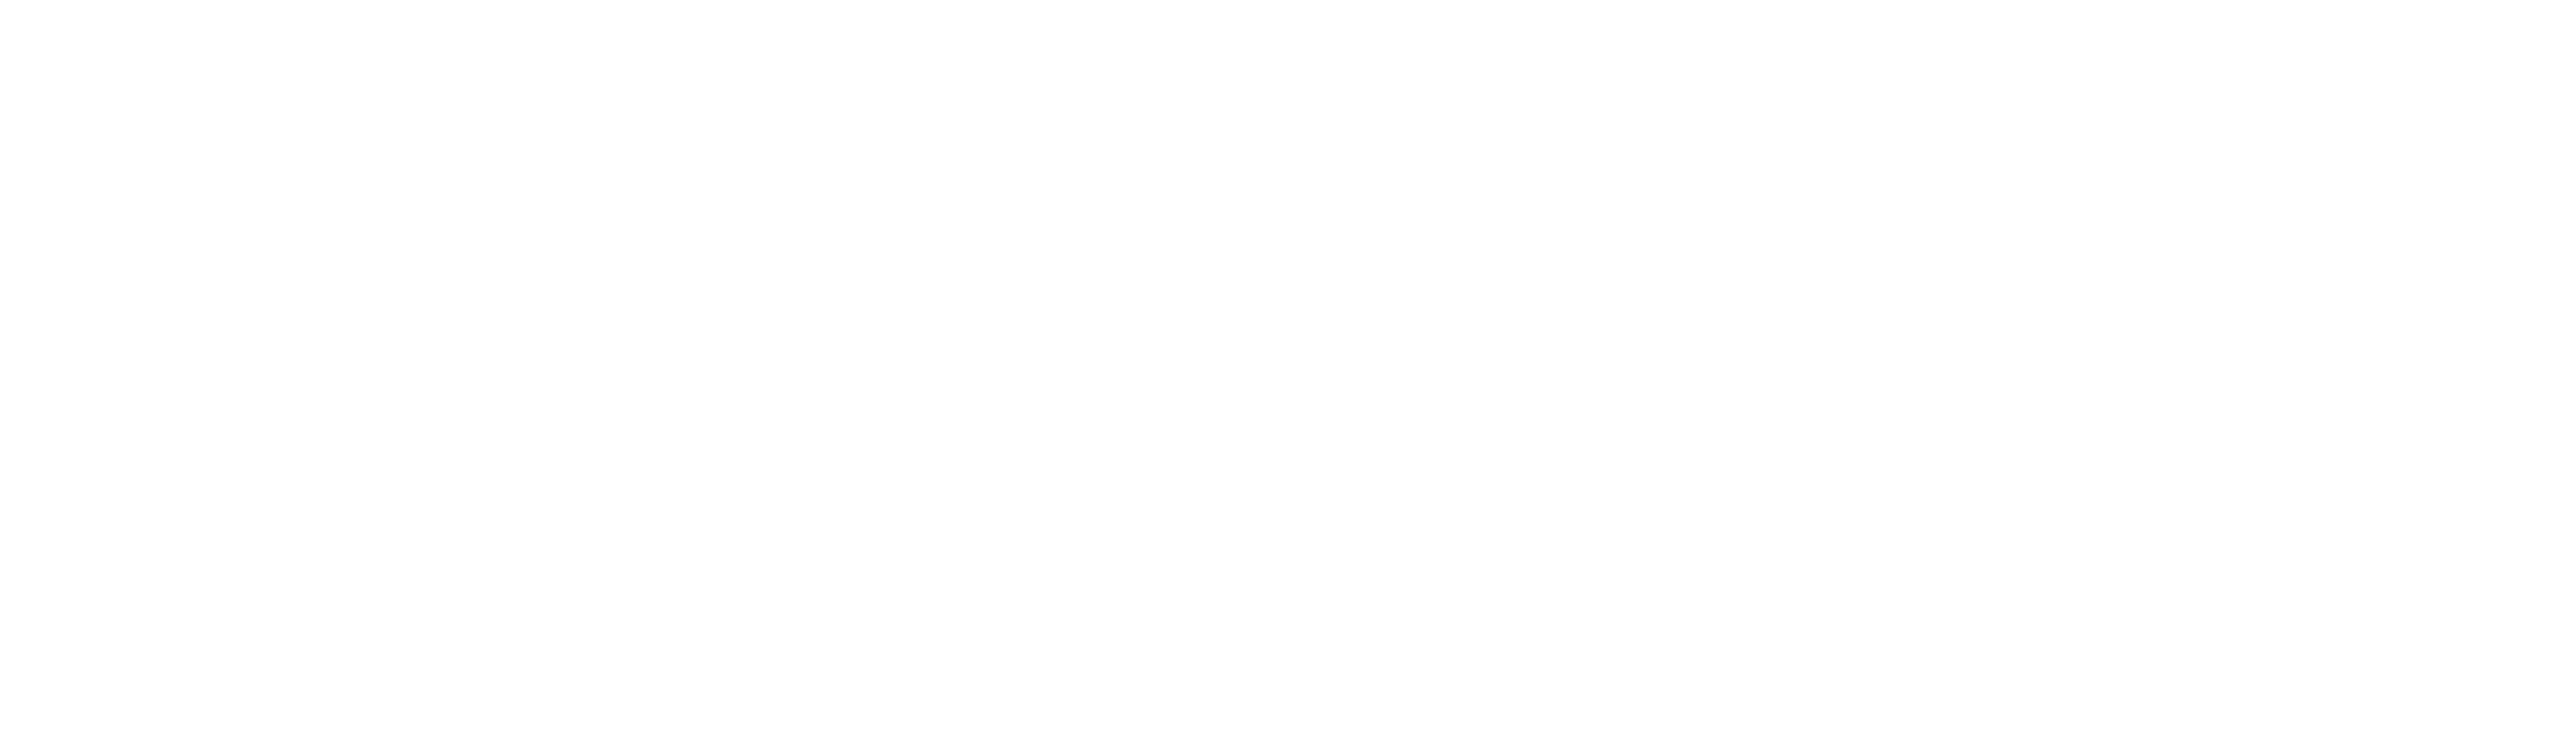 Everfox